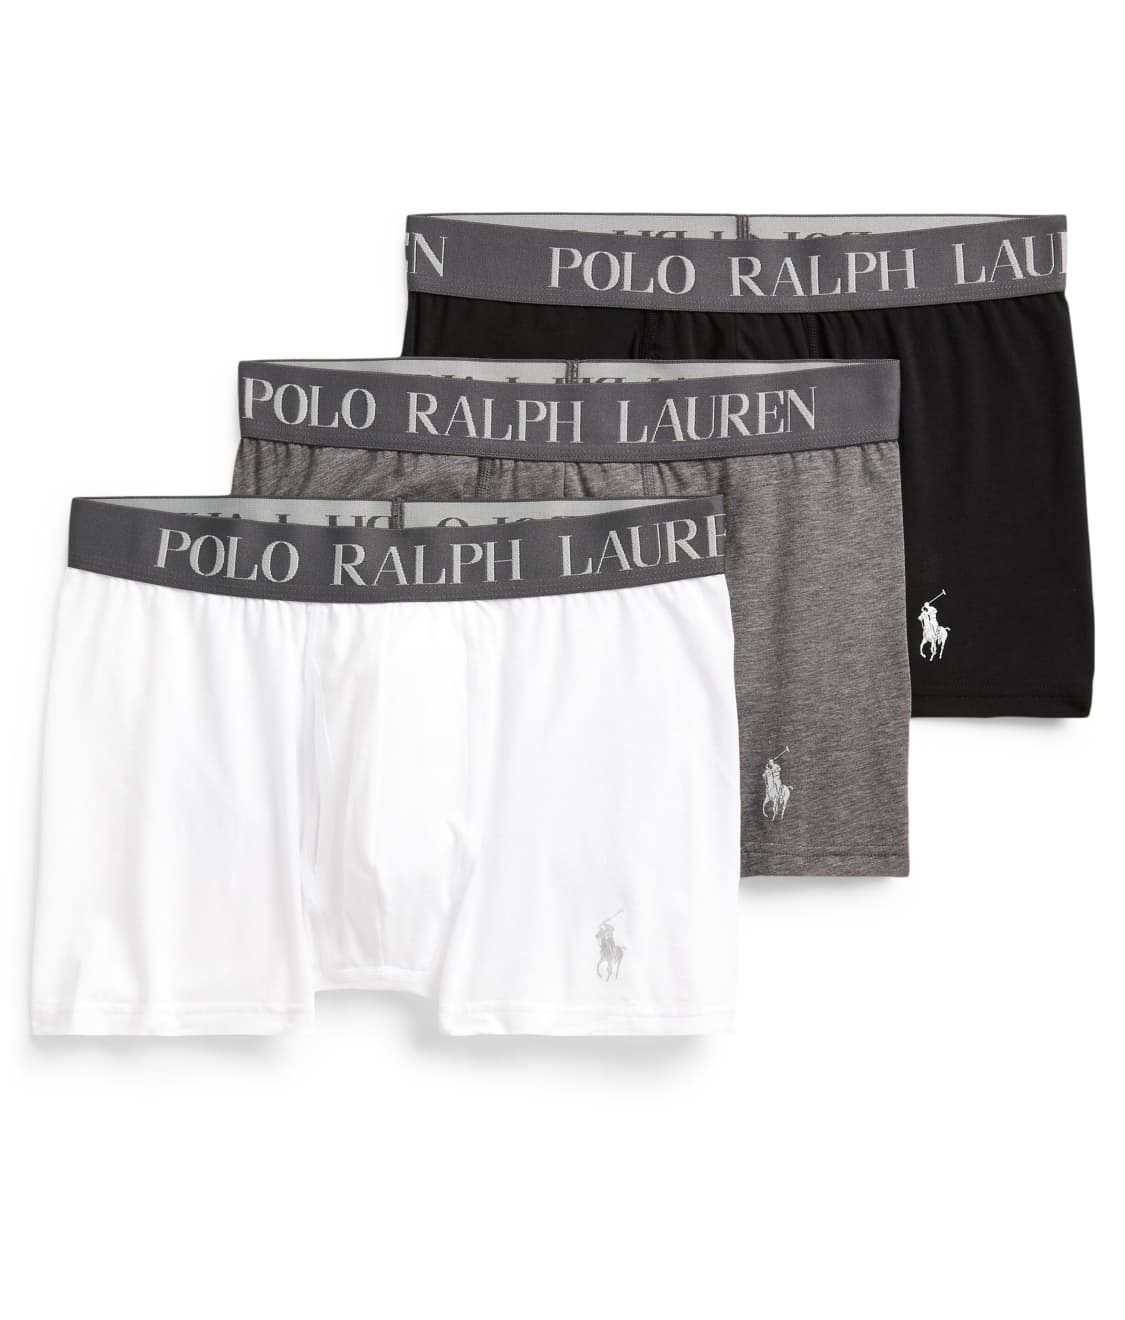 POLO RALPH LAUREN Underwear TRUNKS-Classic Stretch-Cotton Trunk 3